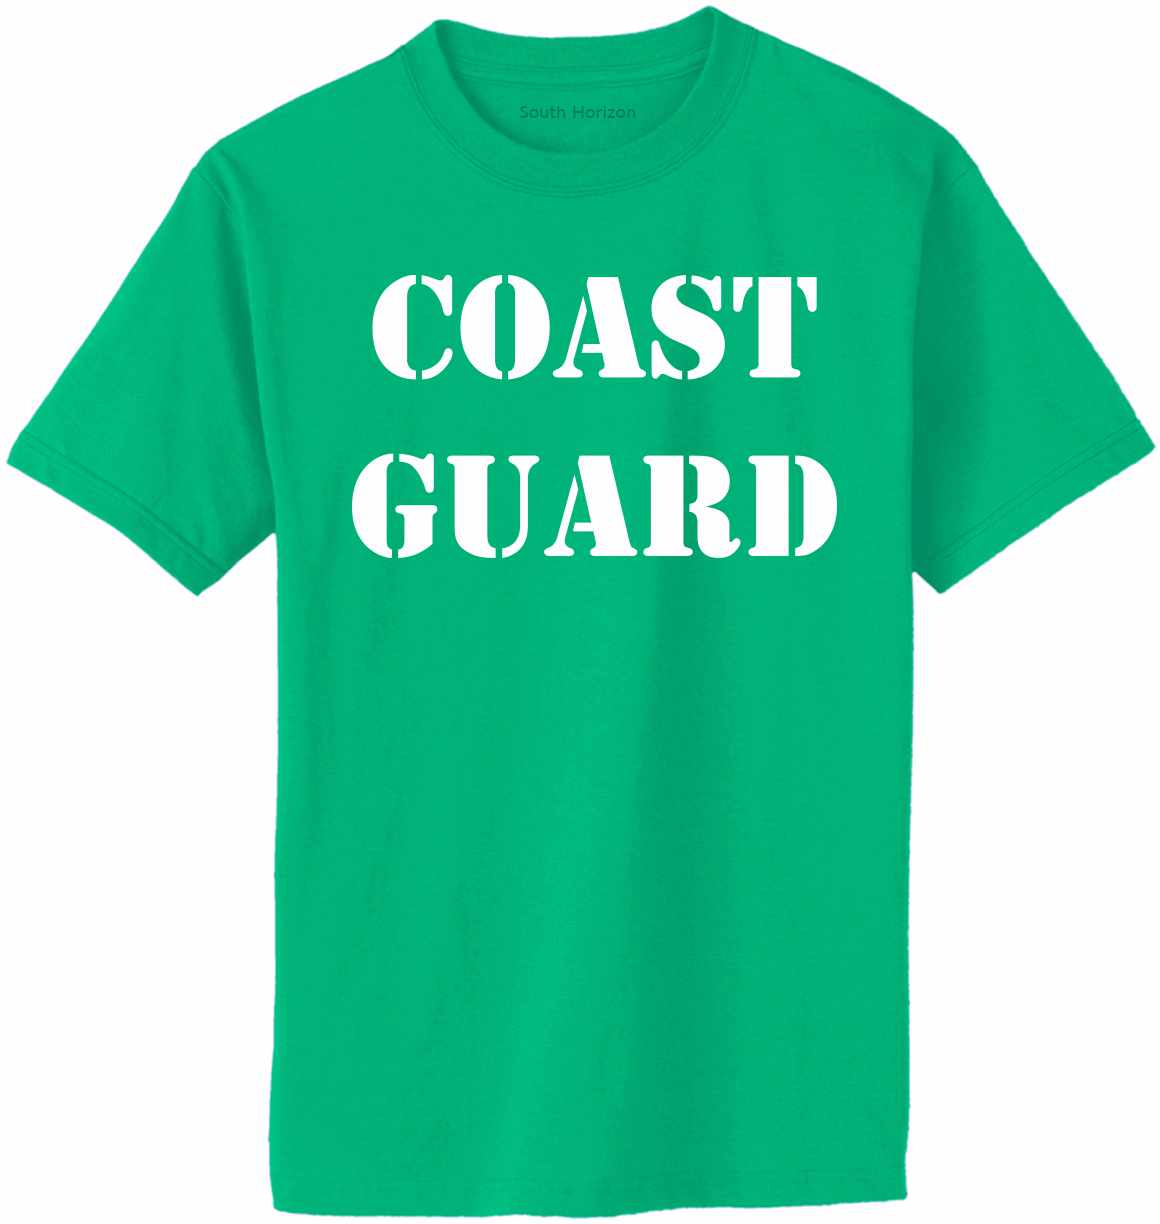 COAST GUARD Adult T-Shirt (#340-1)